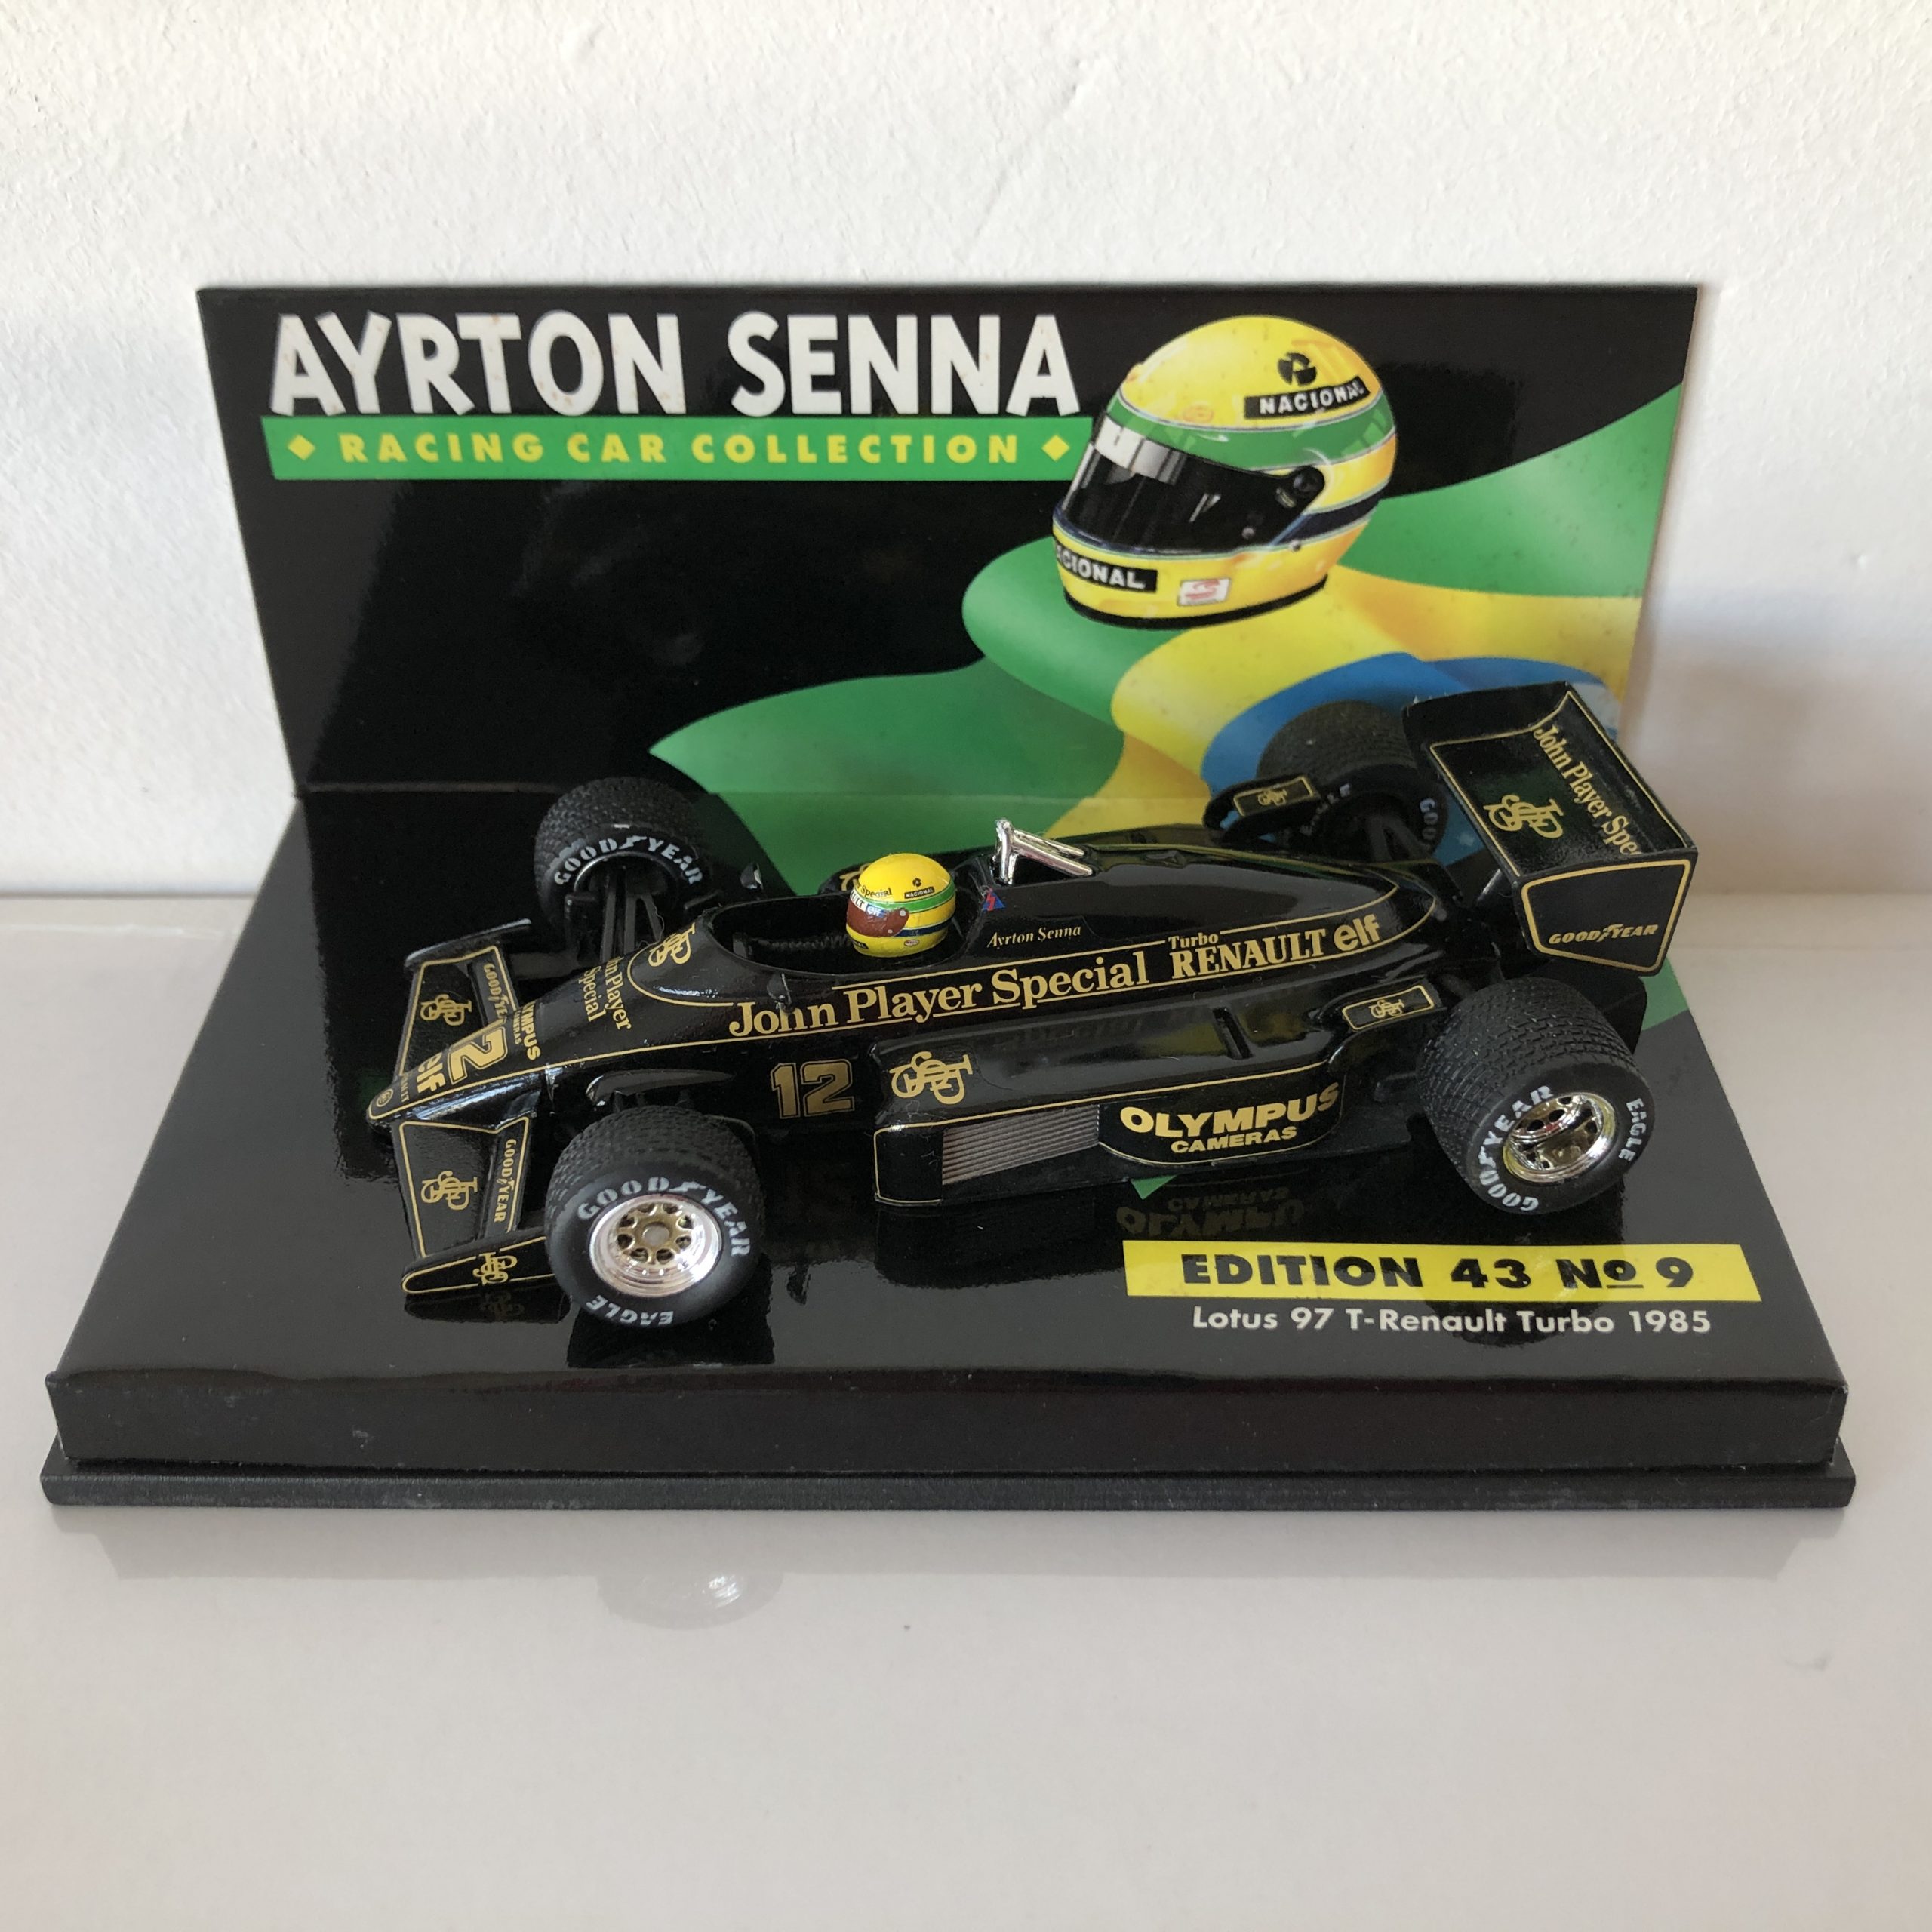 1985 Ayrton Senna Lotus Renault 97T LANG 1:43 Scale Diecast Model Car  Edition 43 No.9